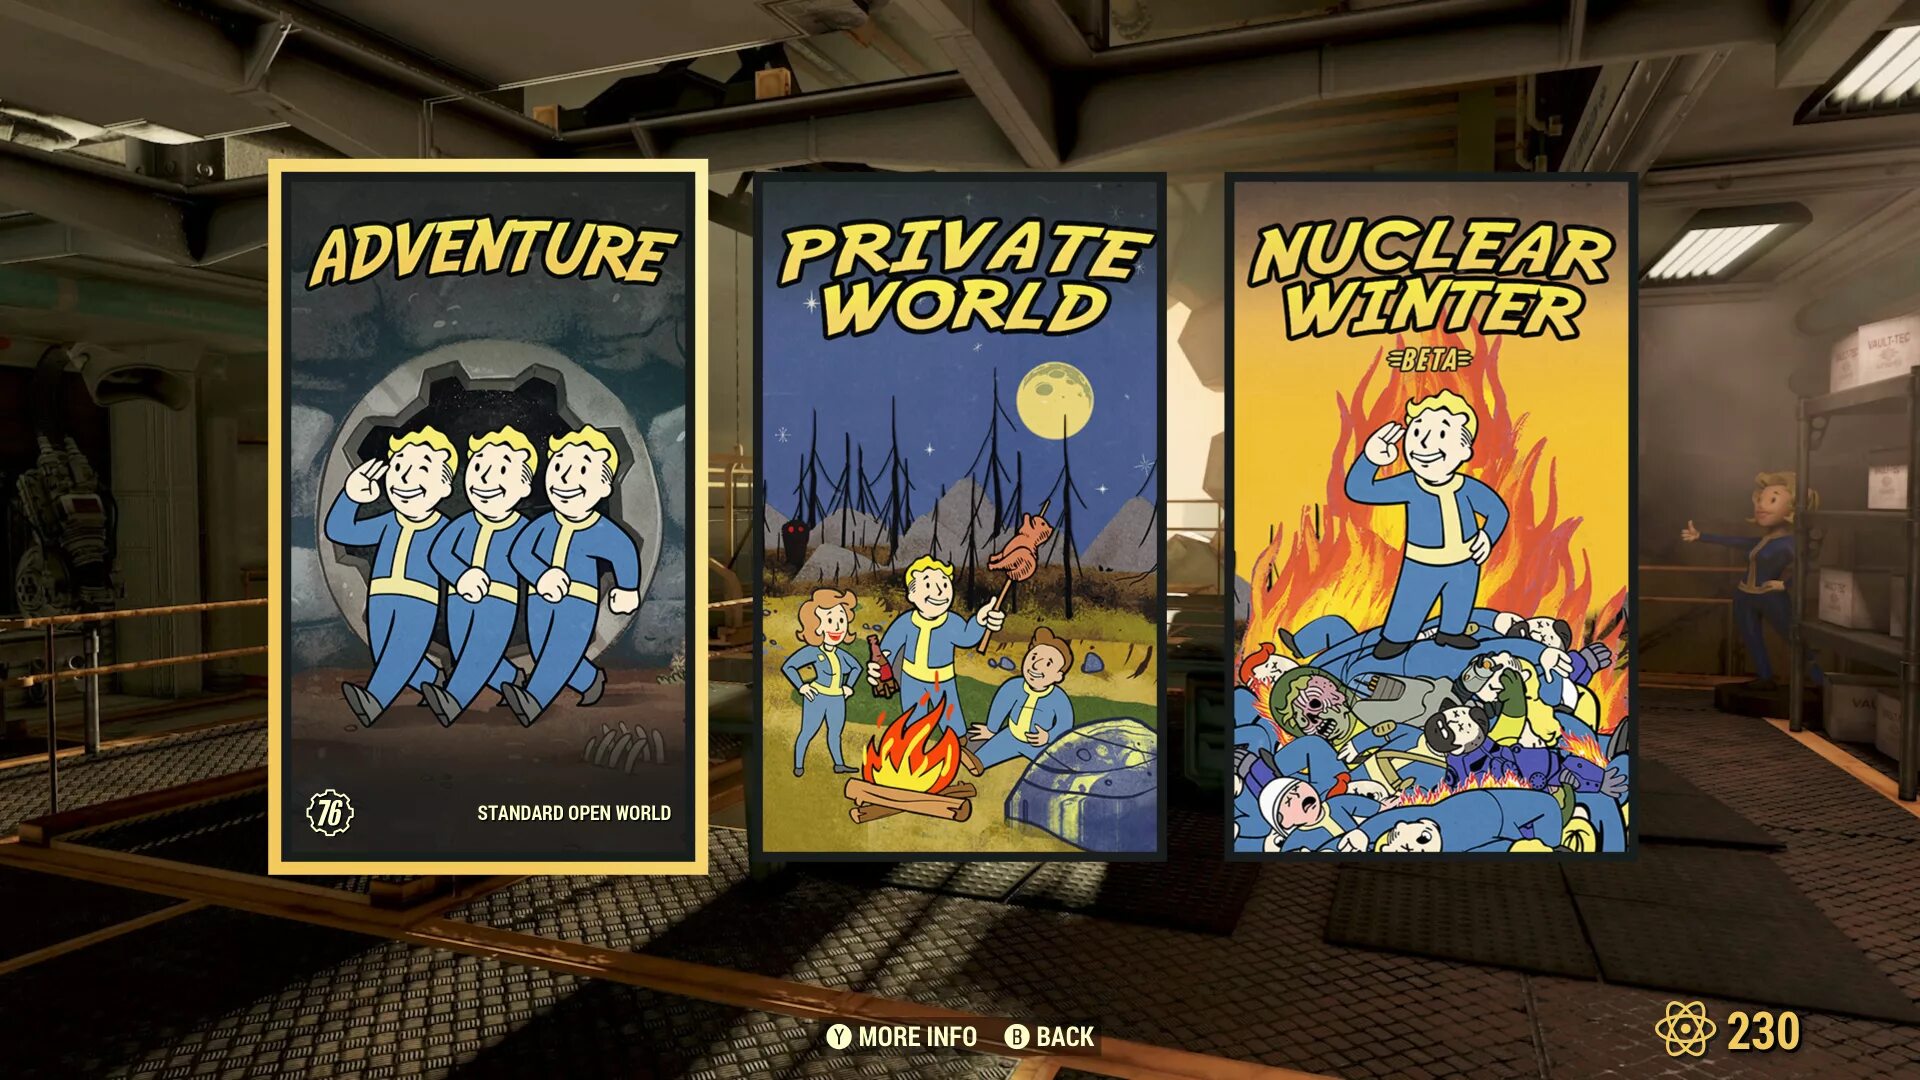 Fallout 76 игровое поле. Fallout 76 nuclear Winter. Fallout 76 обложка. Новое игровое поле фоллаут 76. Private worlds